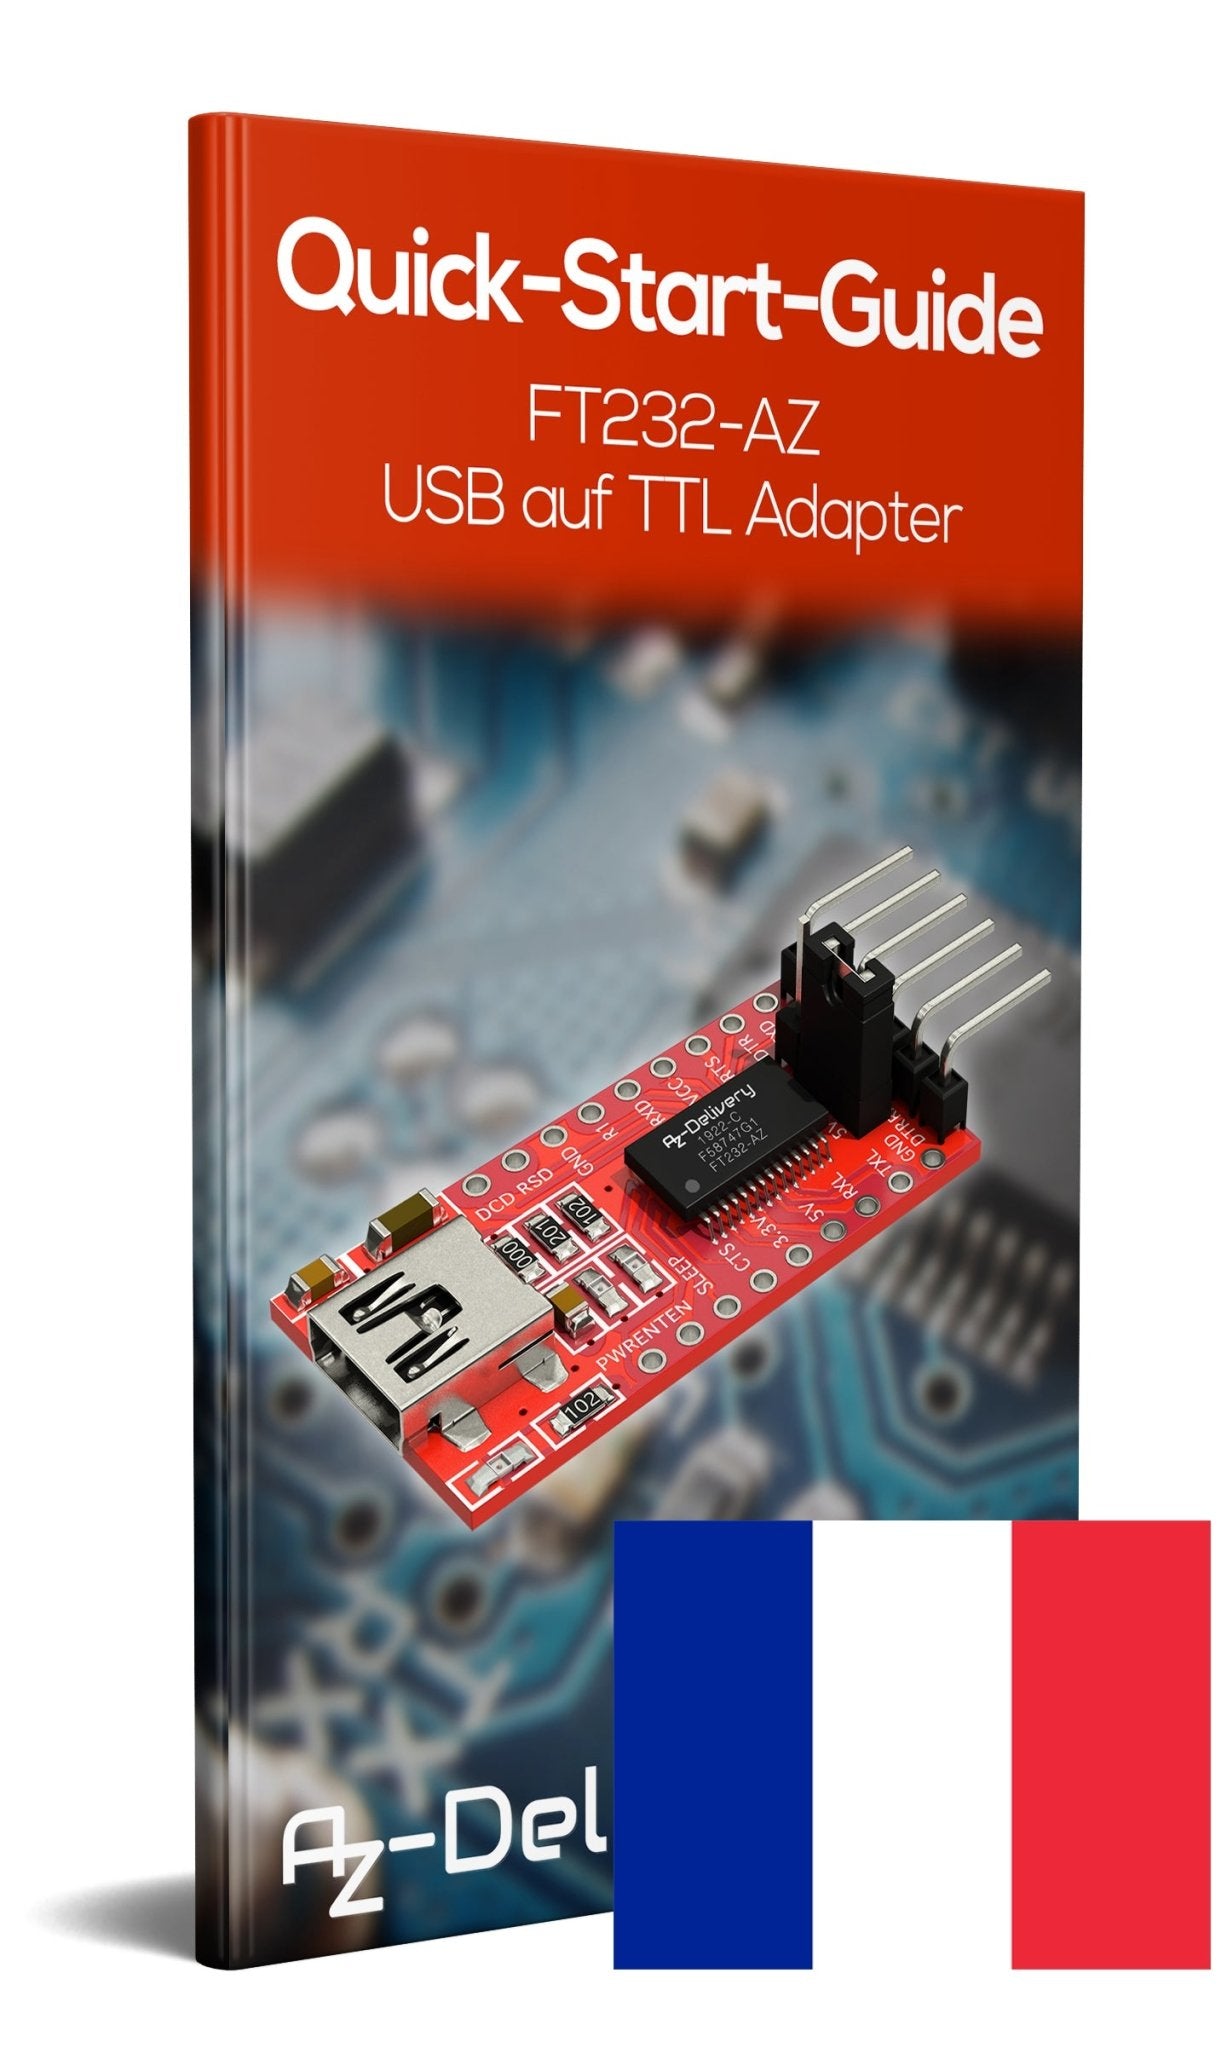 FT232-AZ USB zu TTL Serial Adapter für 3,3V und 5V - AZ-Delivery